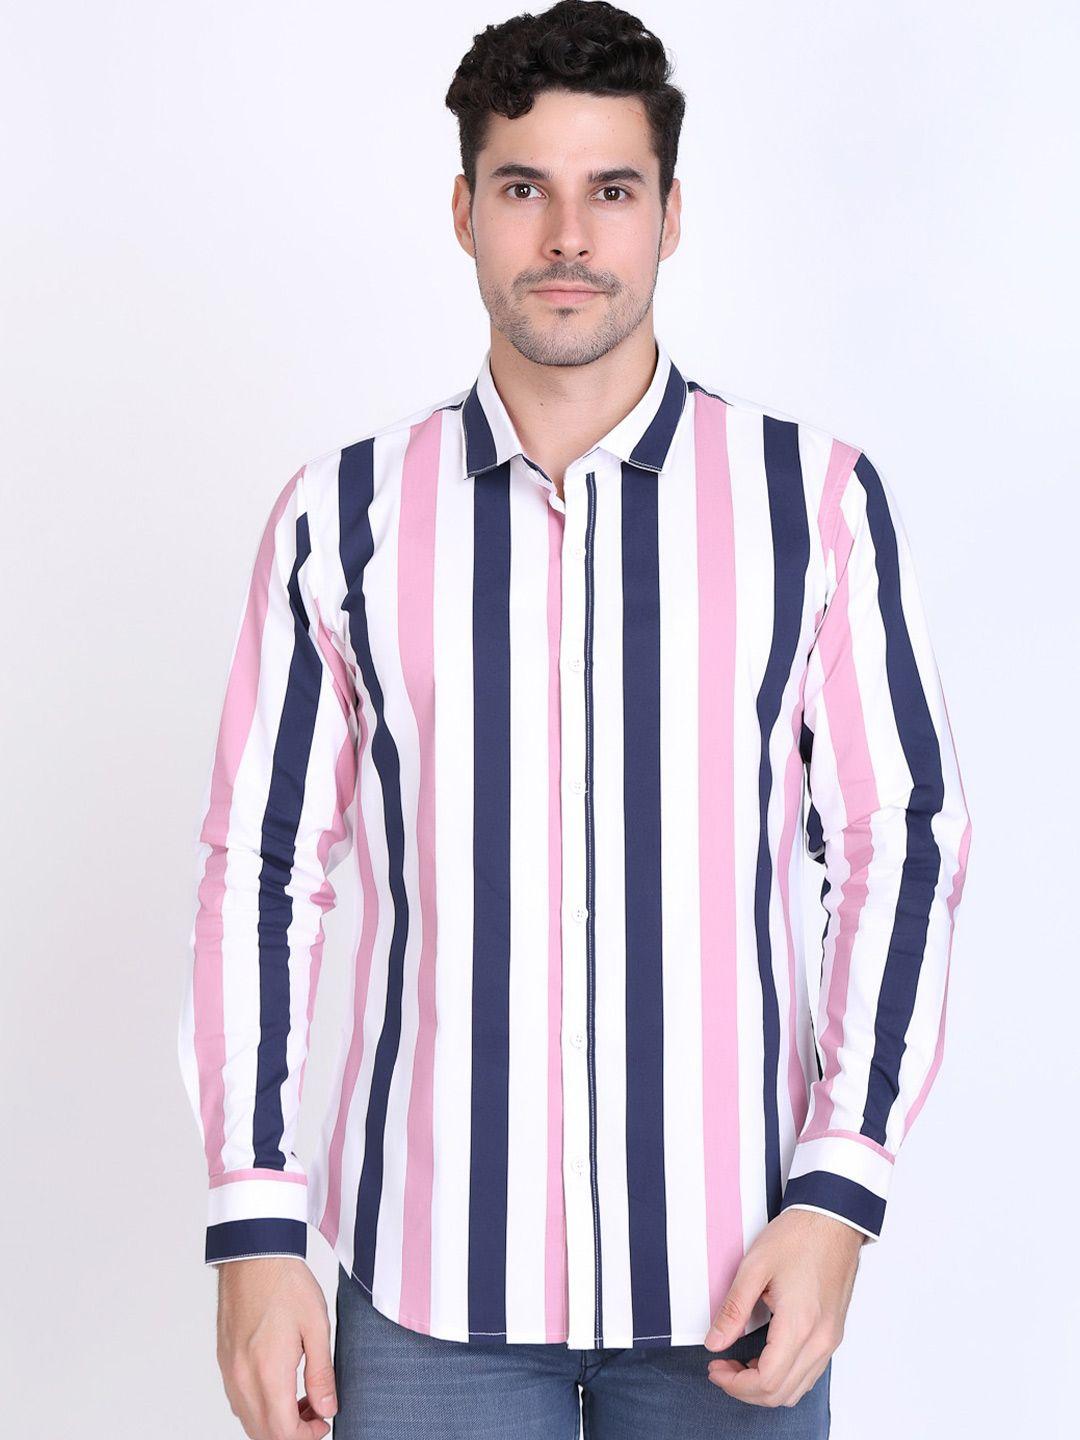 dezano slim fit vertical striped cotton casual shirt